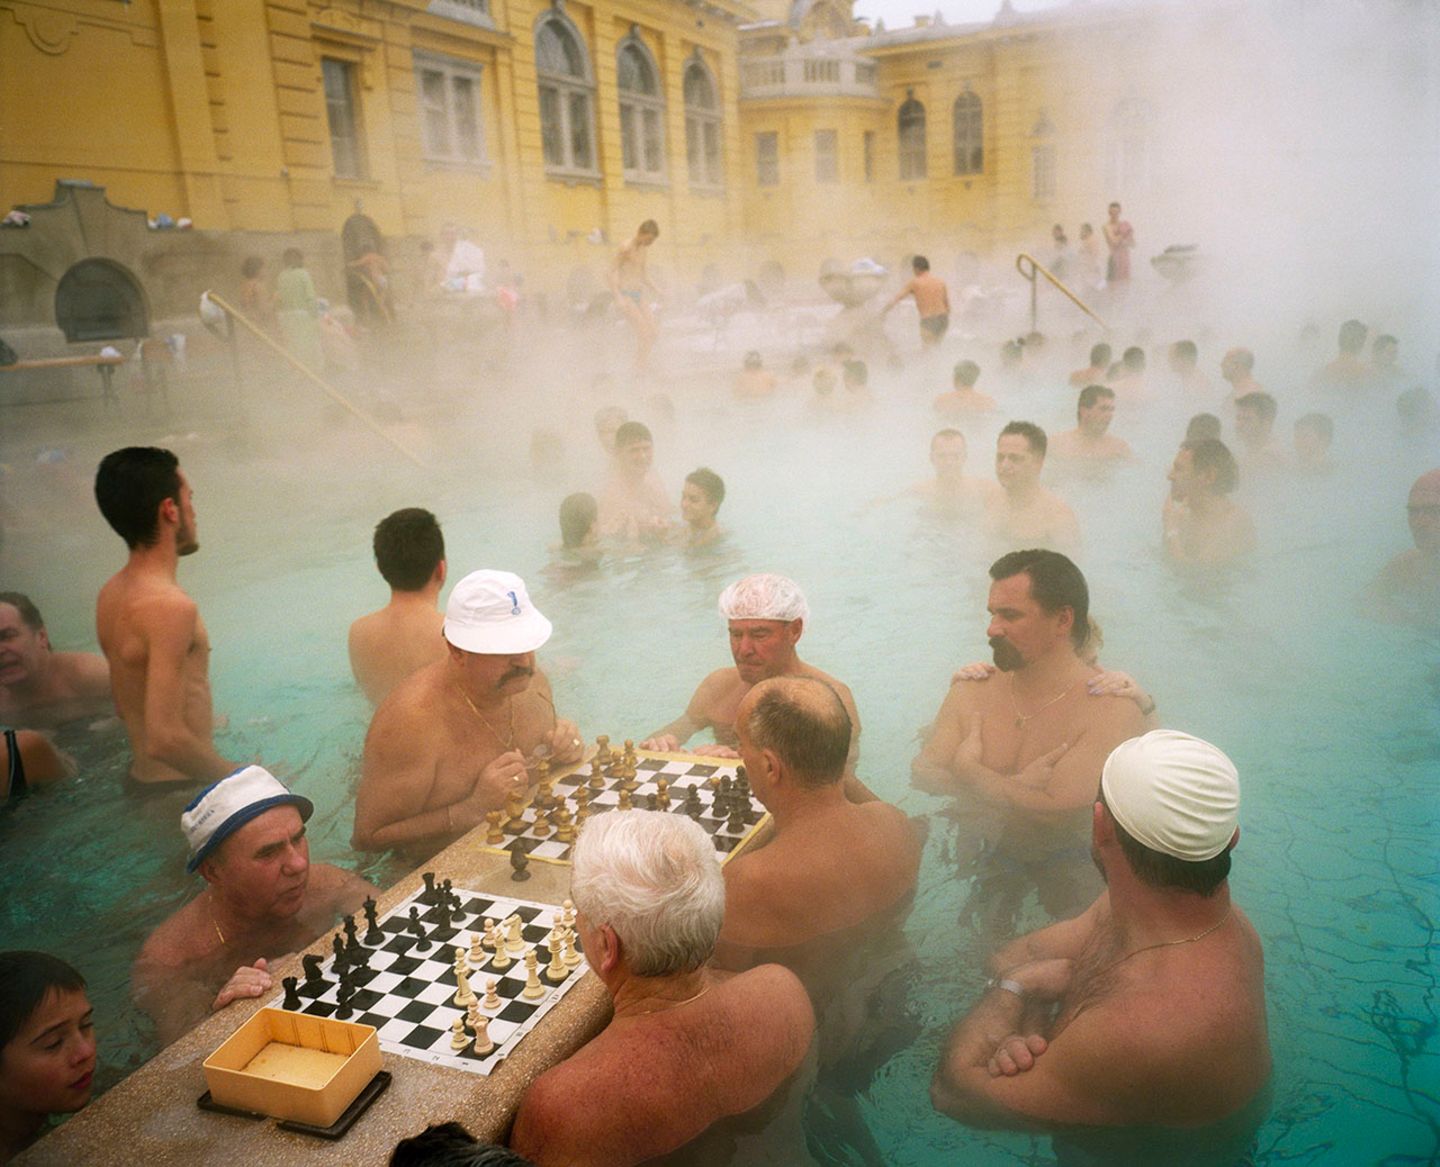 Martin Parr / Szechenyi thermal baths, Budapest, Hungary, 1997